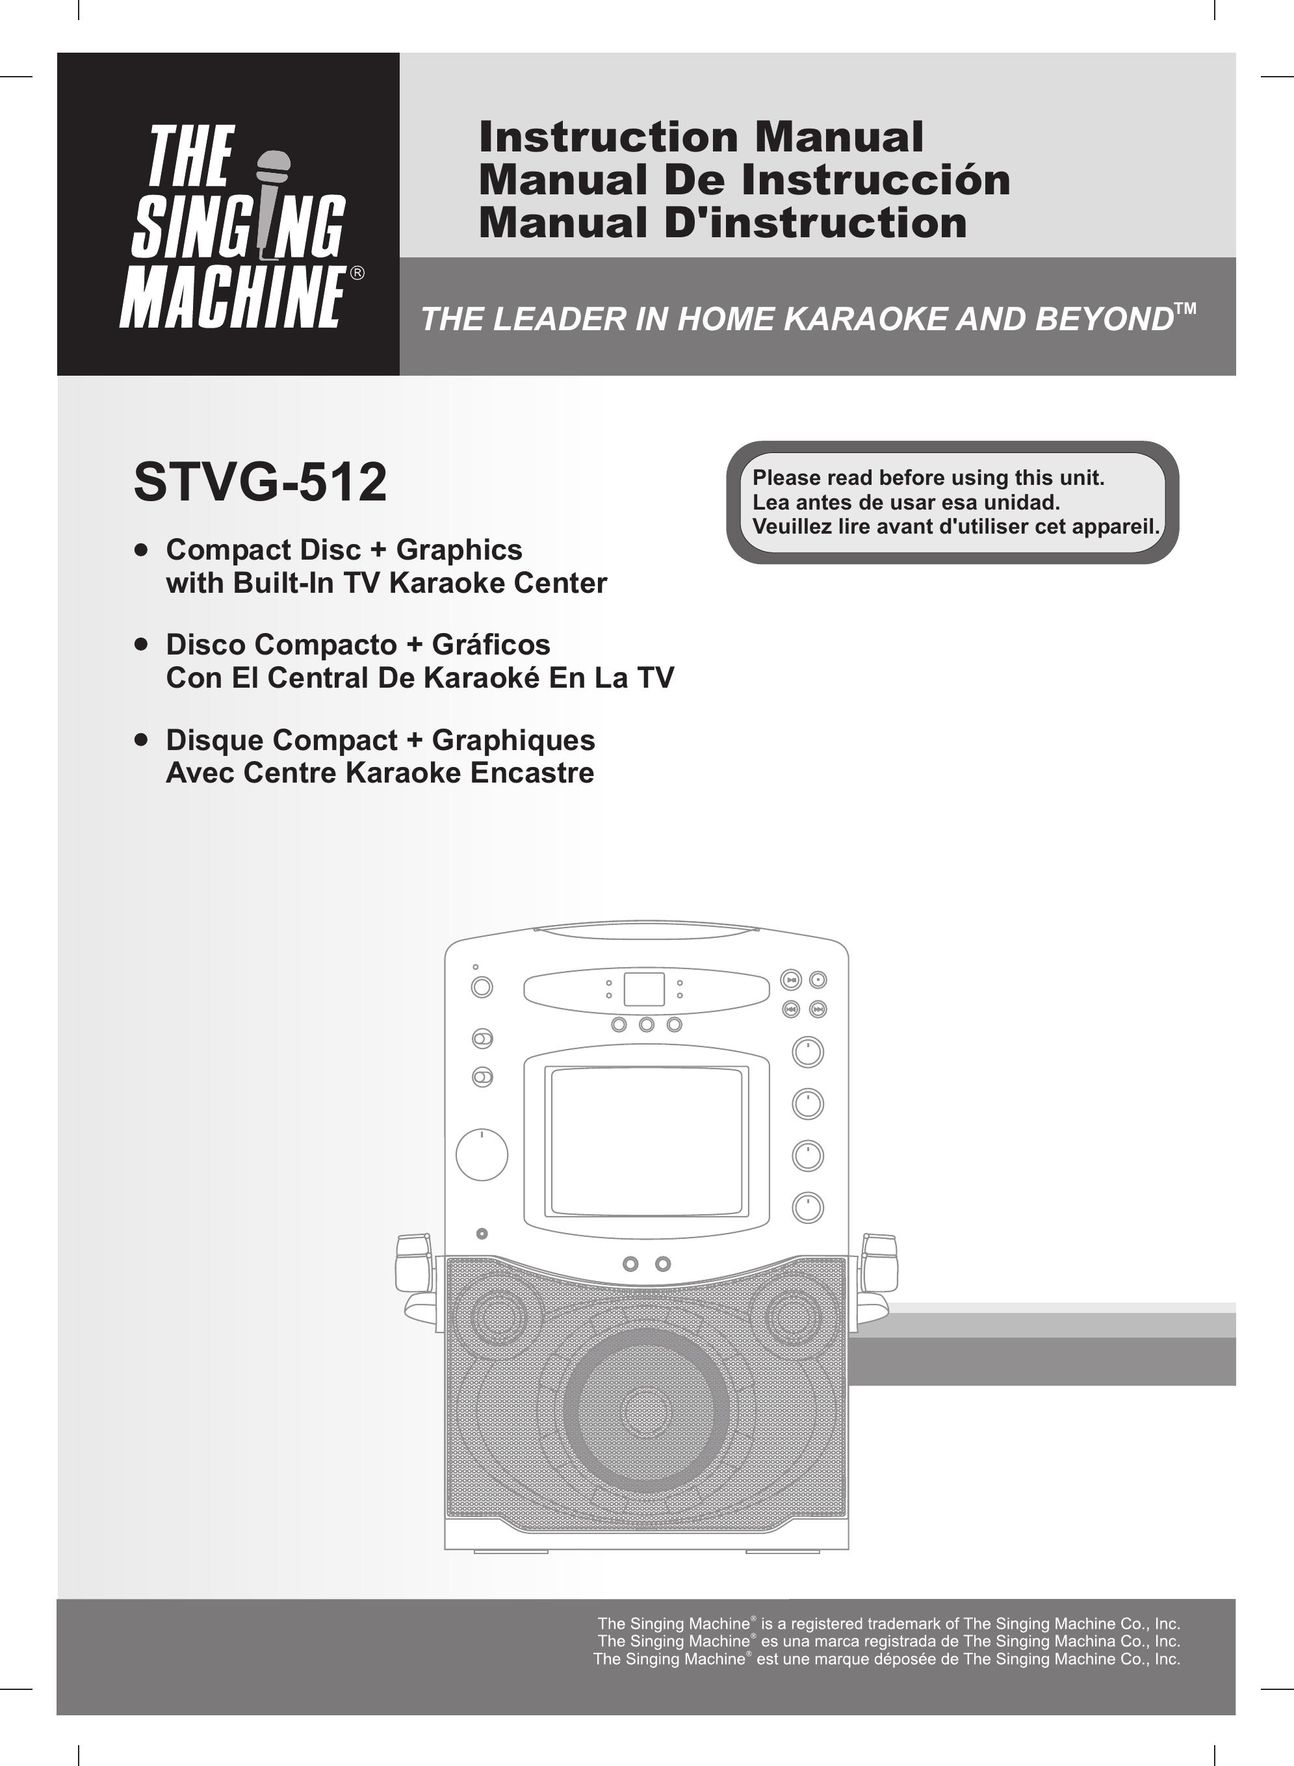 The Singing Machine STVG-512 Car Video System User Manual